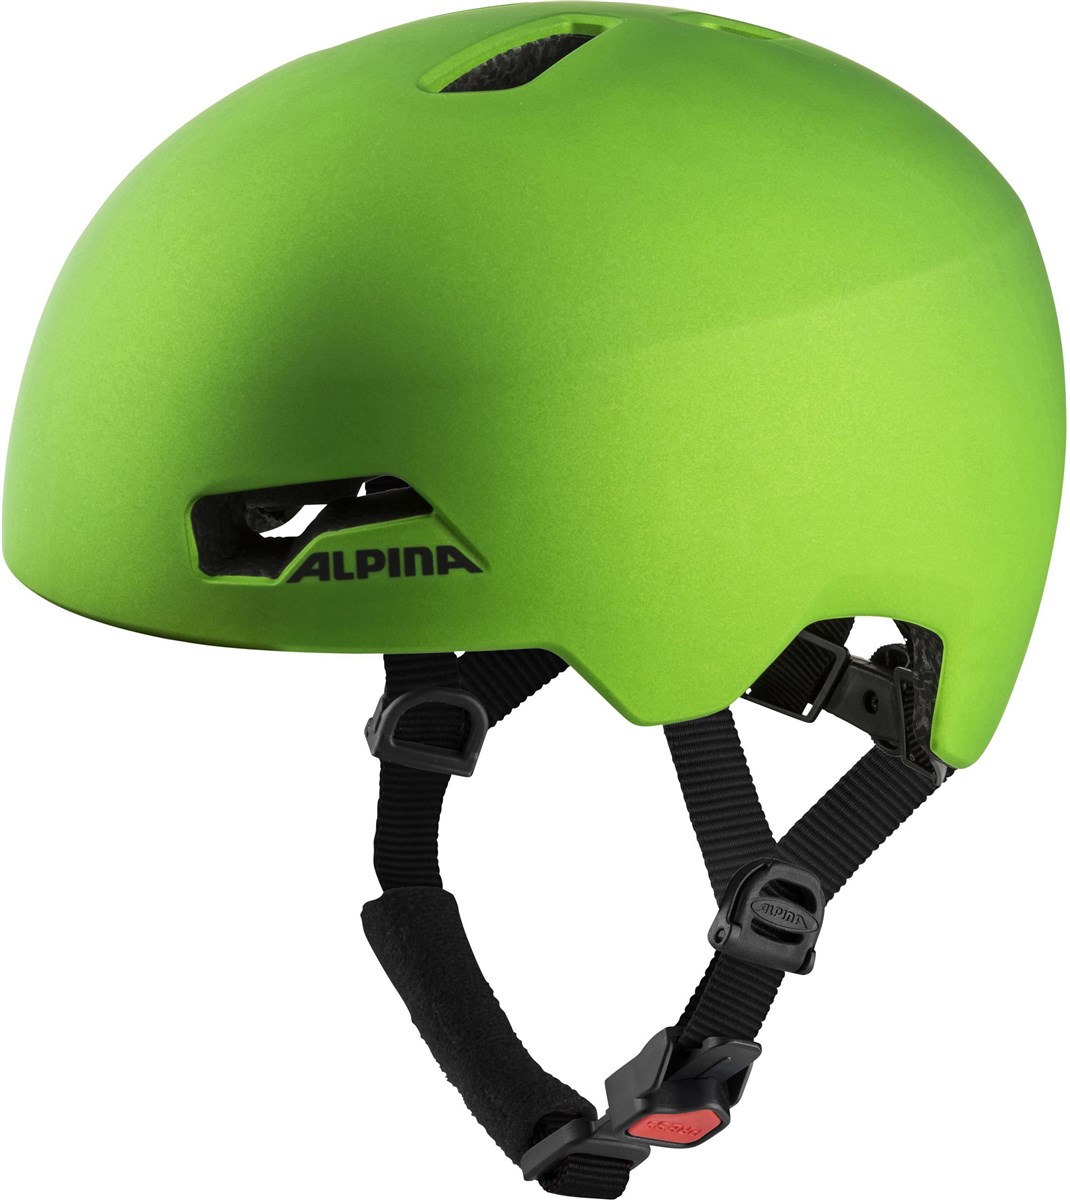 Alpina Hackney BMX / Skate Helmet product image